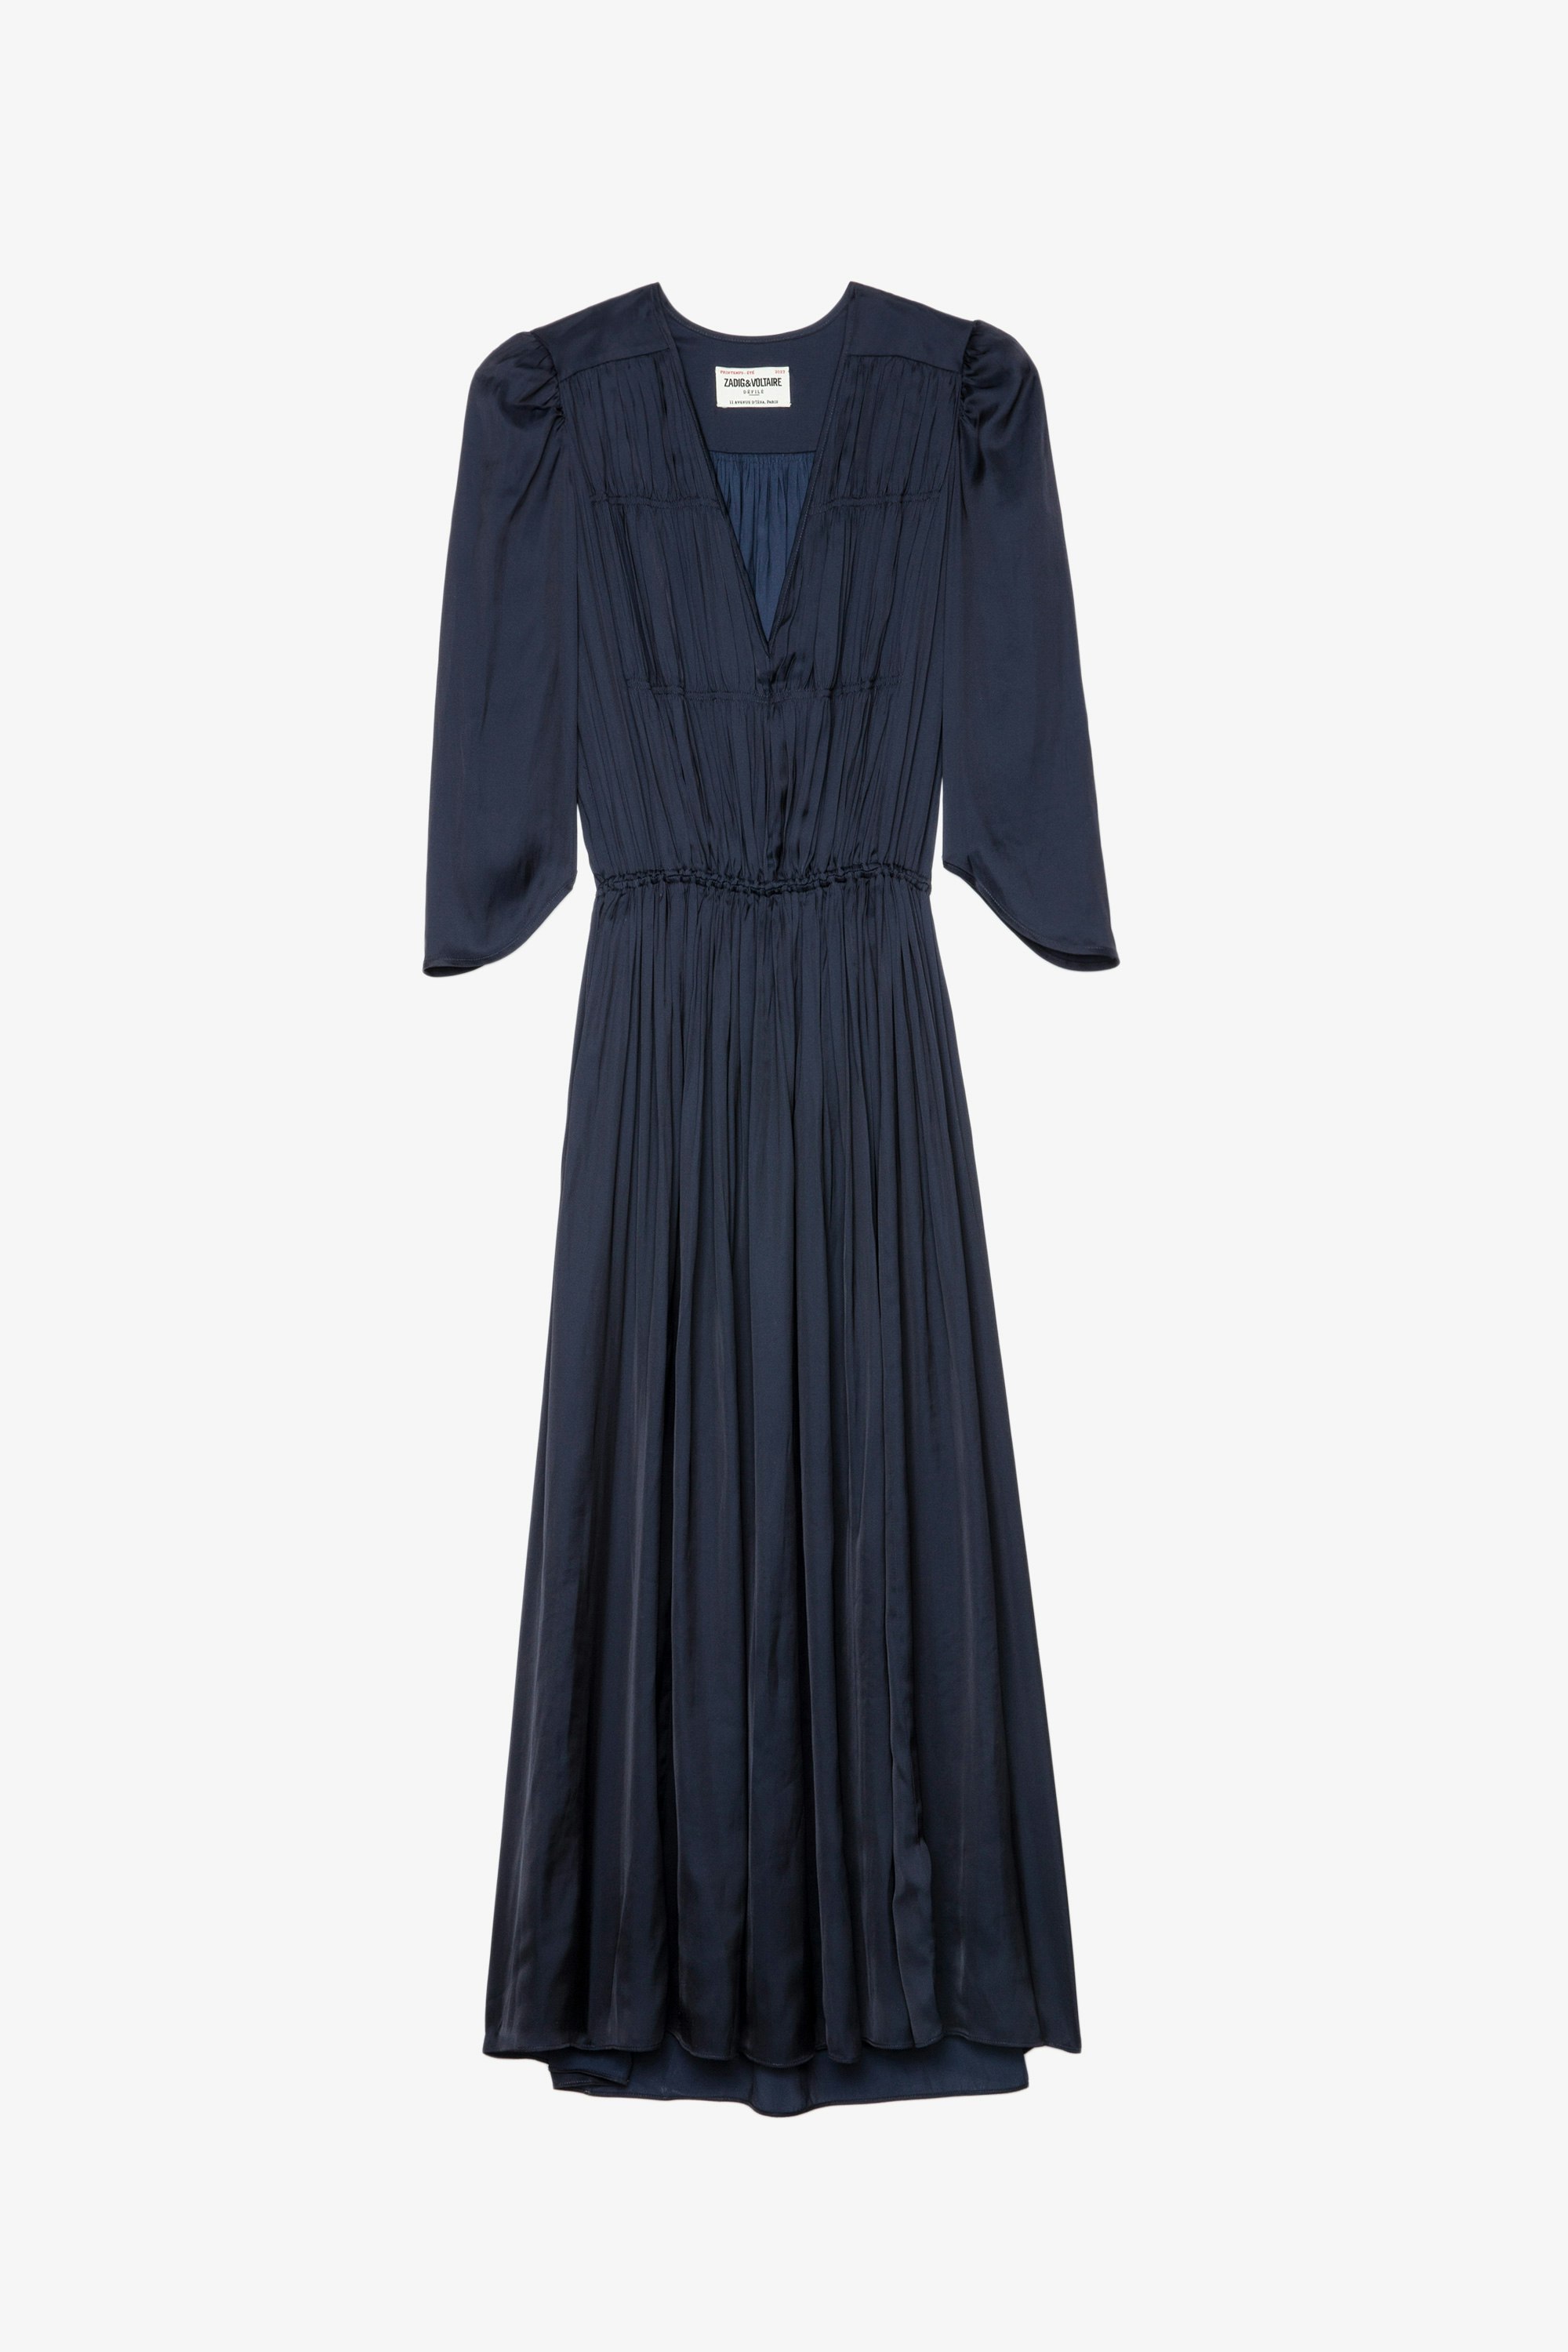 Ryoko Dress Women's long navy blue satin dress, draped with asymmetrical sleeves